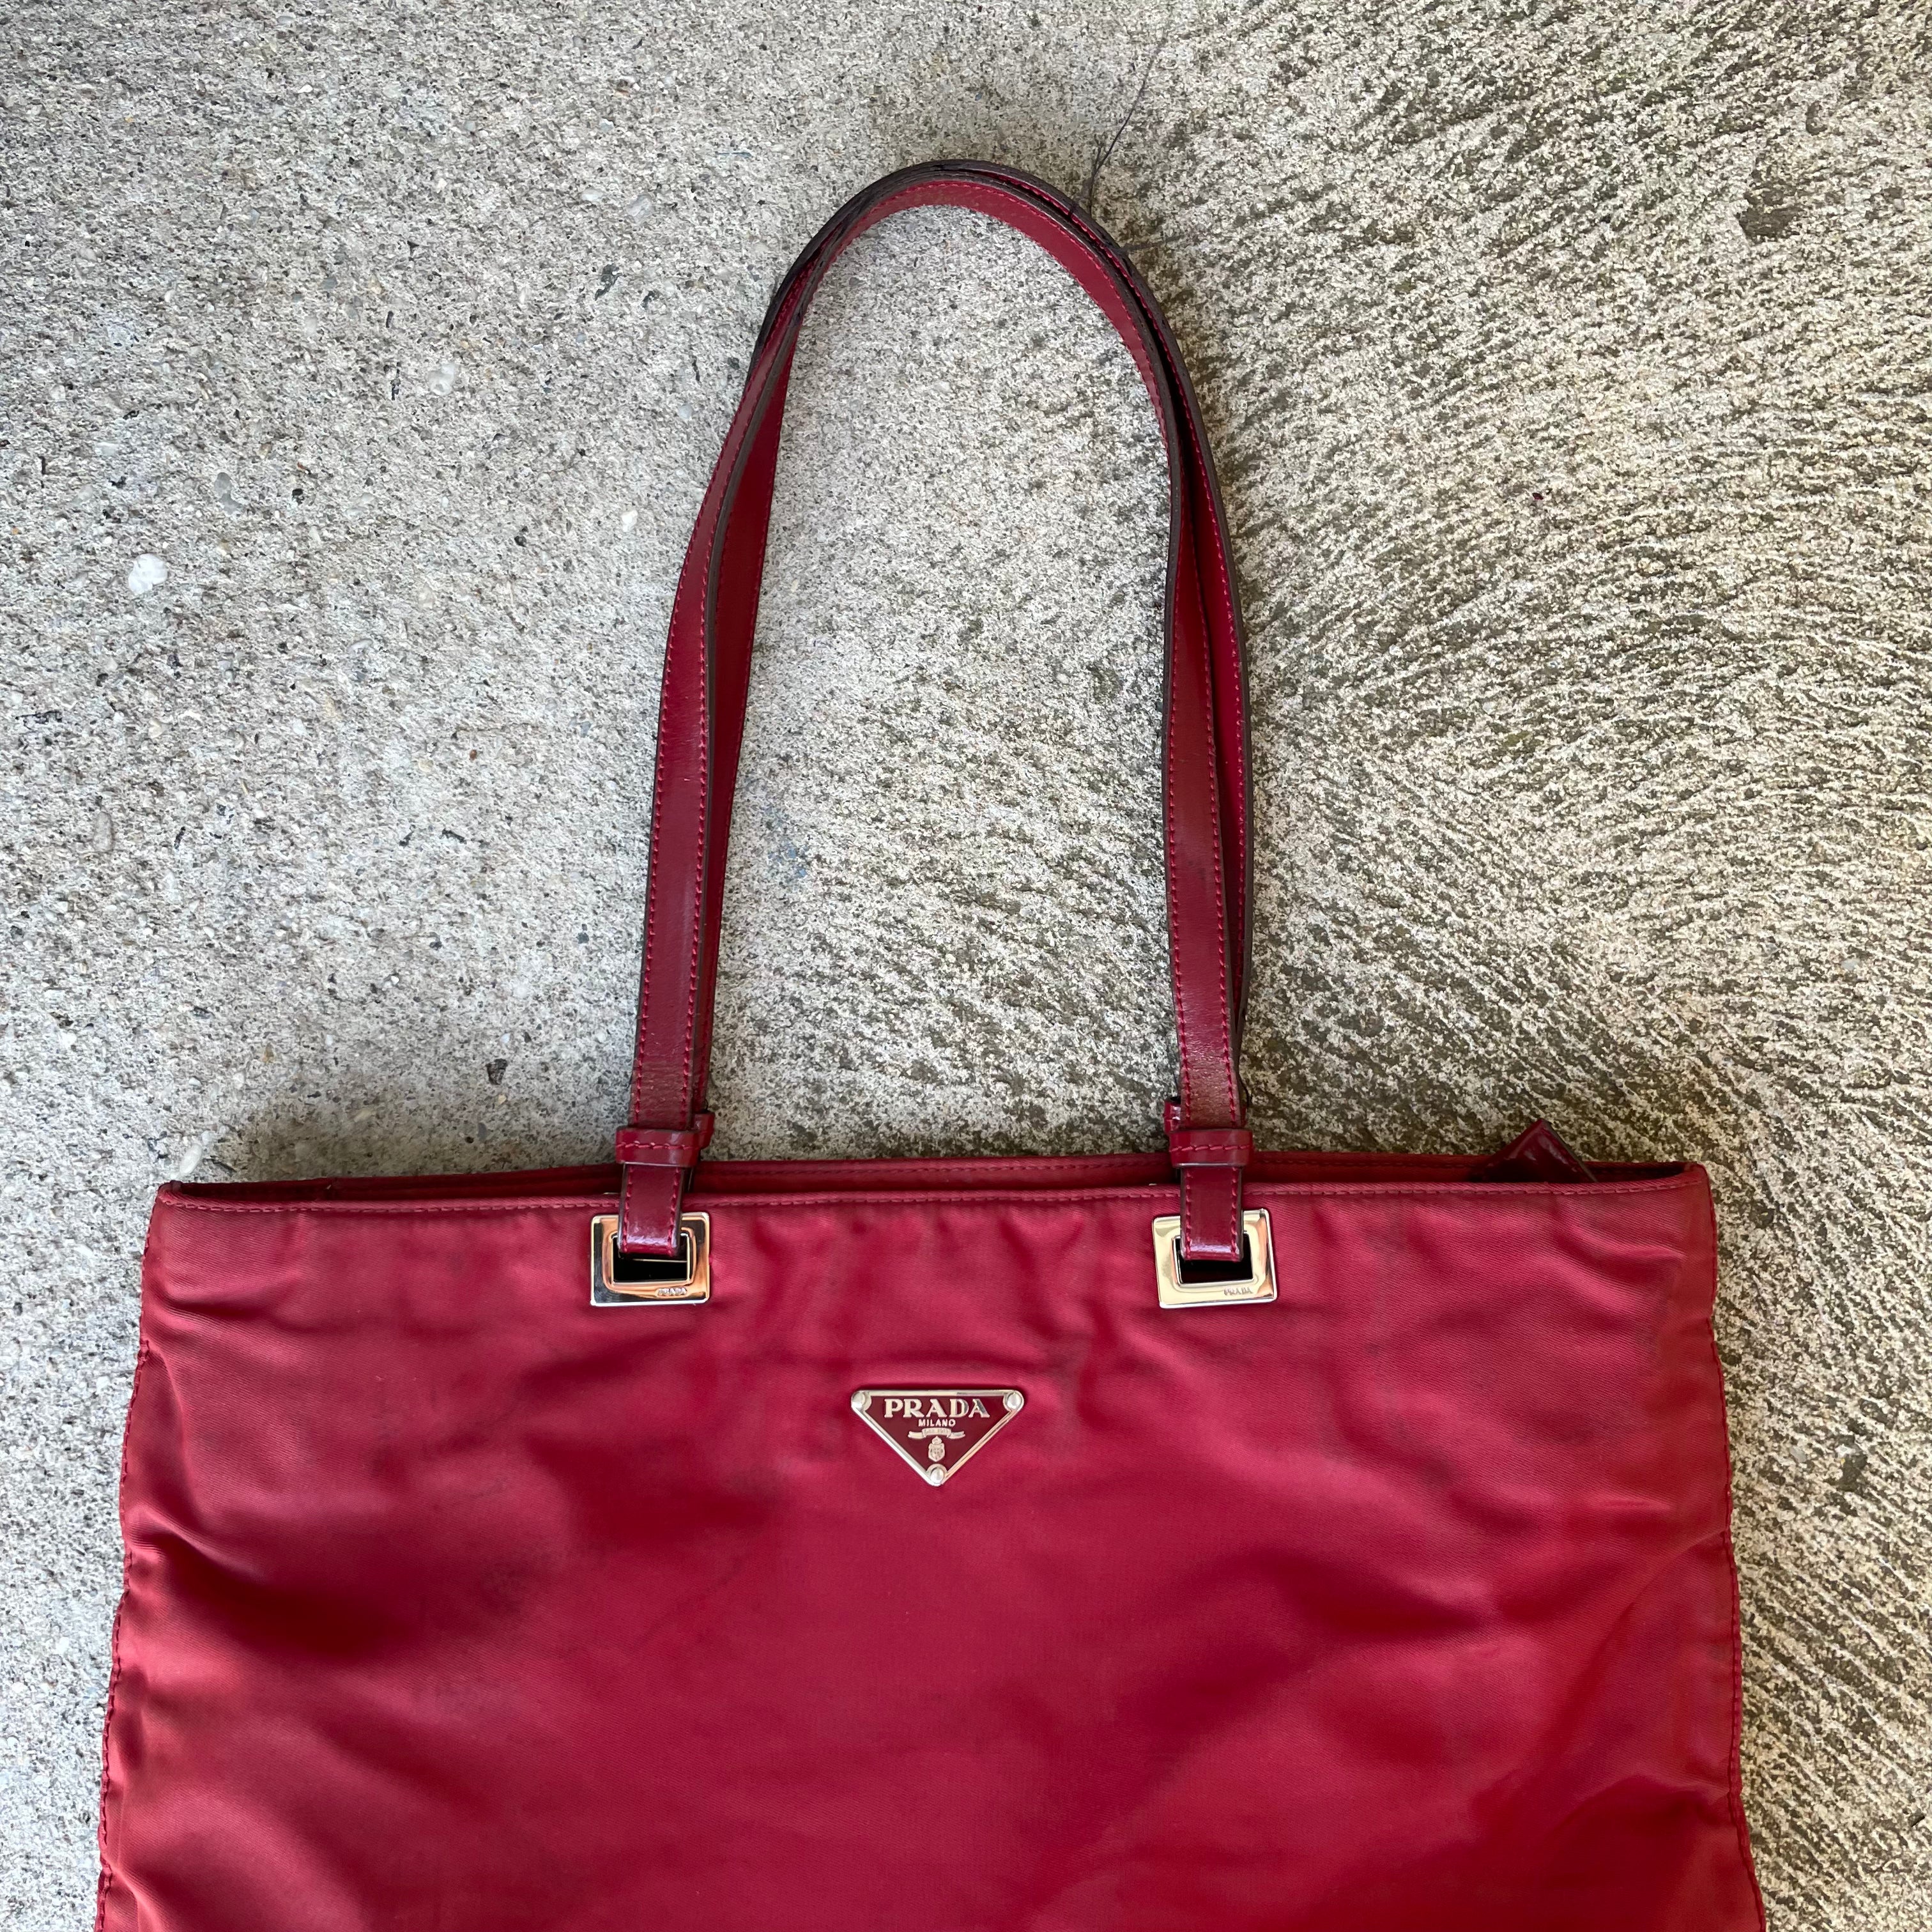 Prada Nylon Red Tote Bag